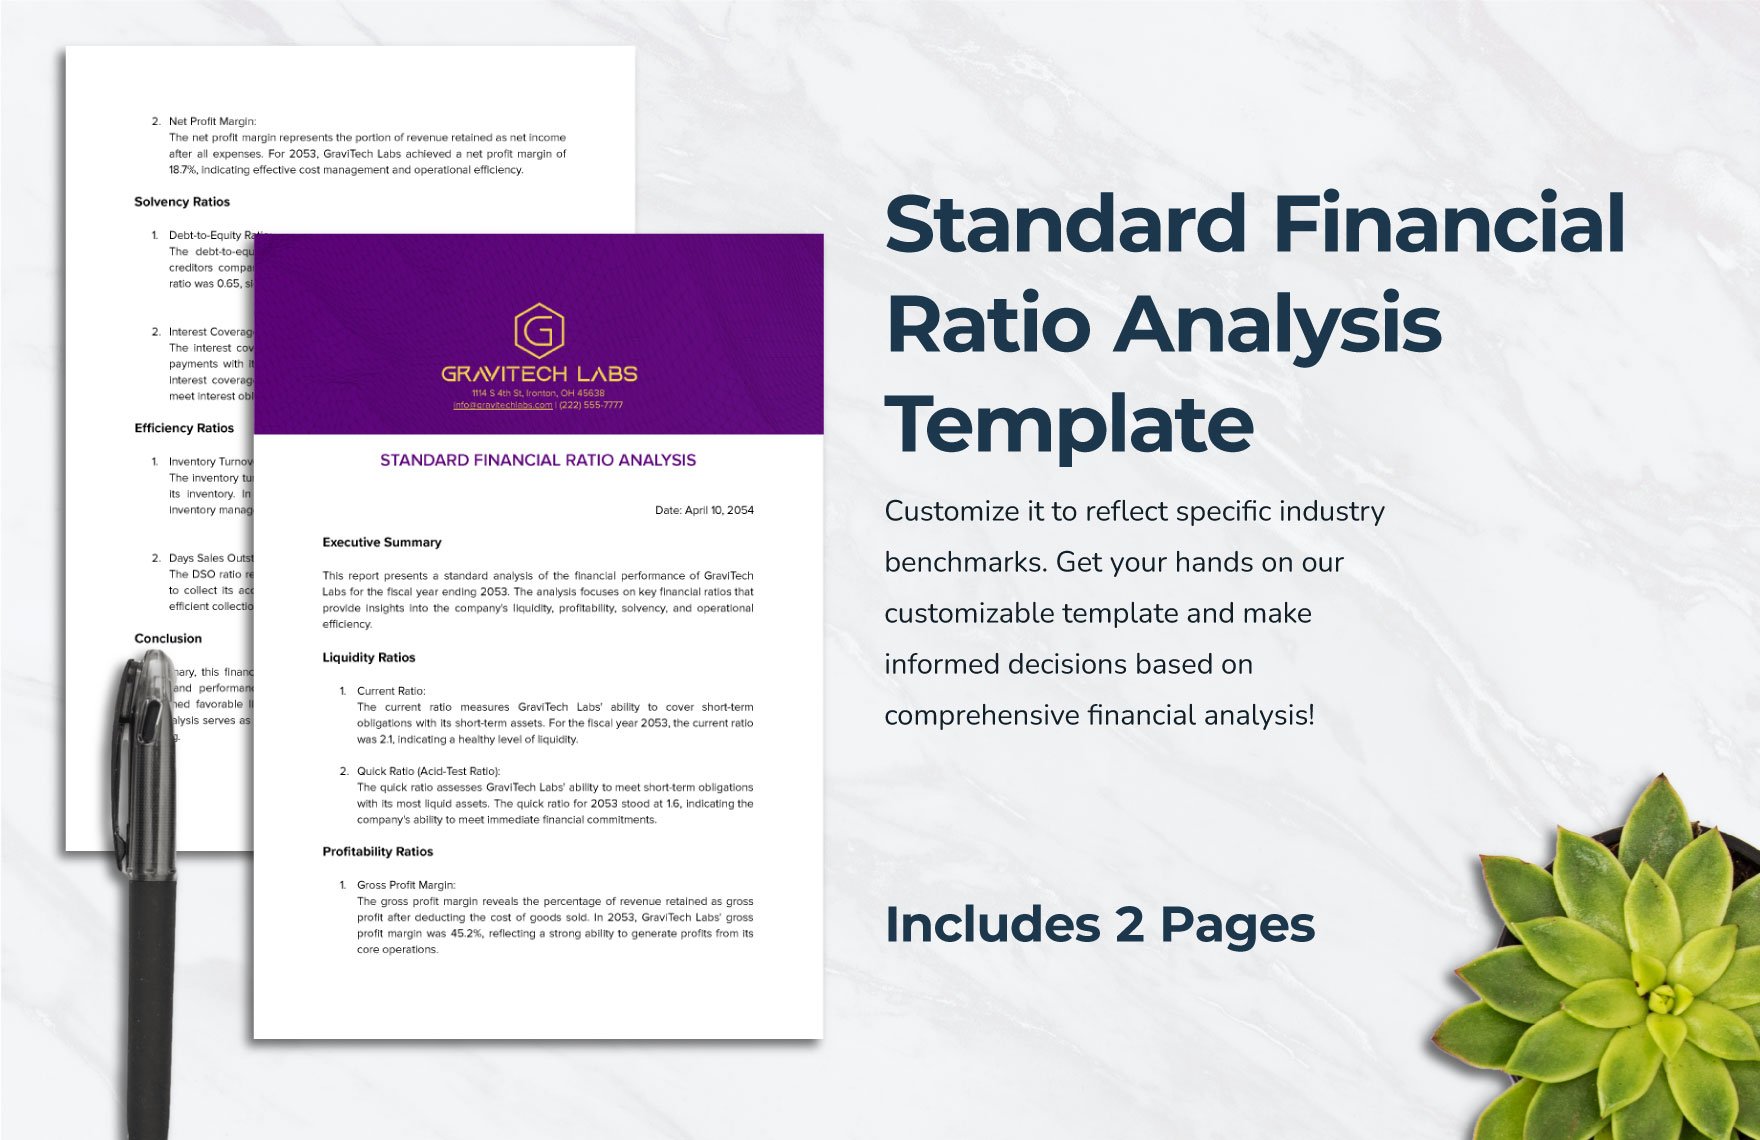 Standard Financial Ratio Analysis Template